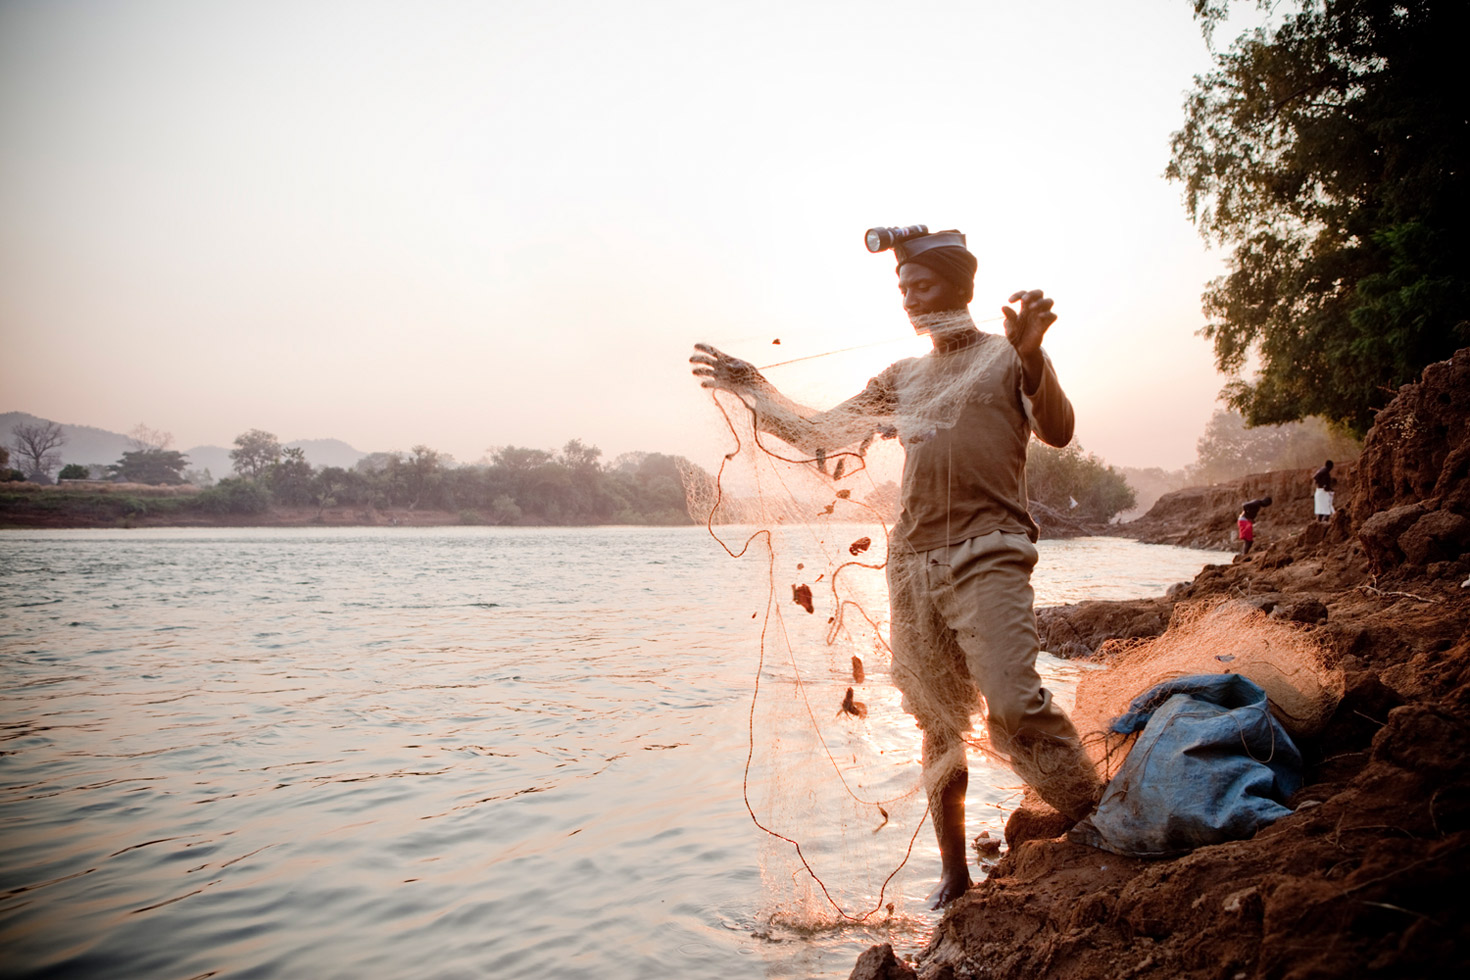 Malian fisherman and expedition guide Yousef Keita prepares his fishing nets at the village of Mako on the edge of Niokolo Koba National Park, Senegal.